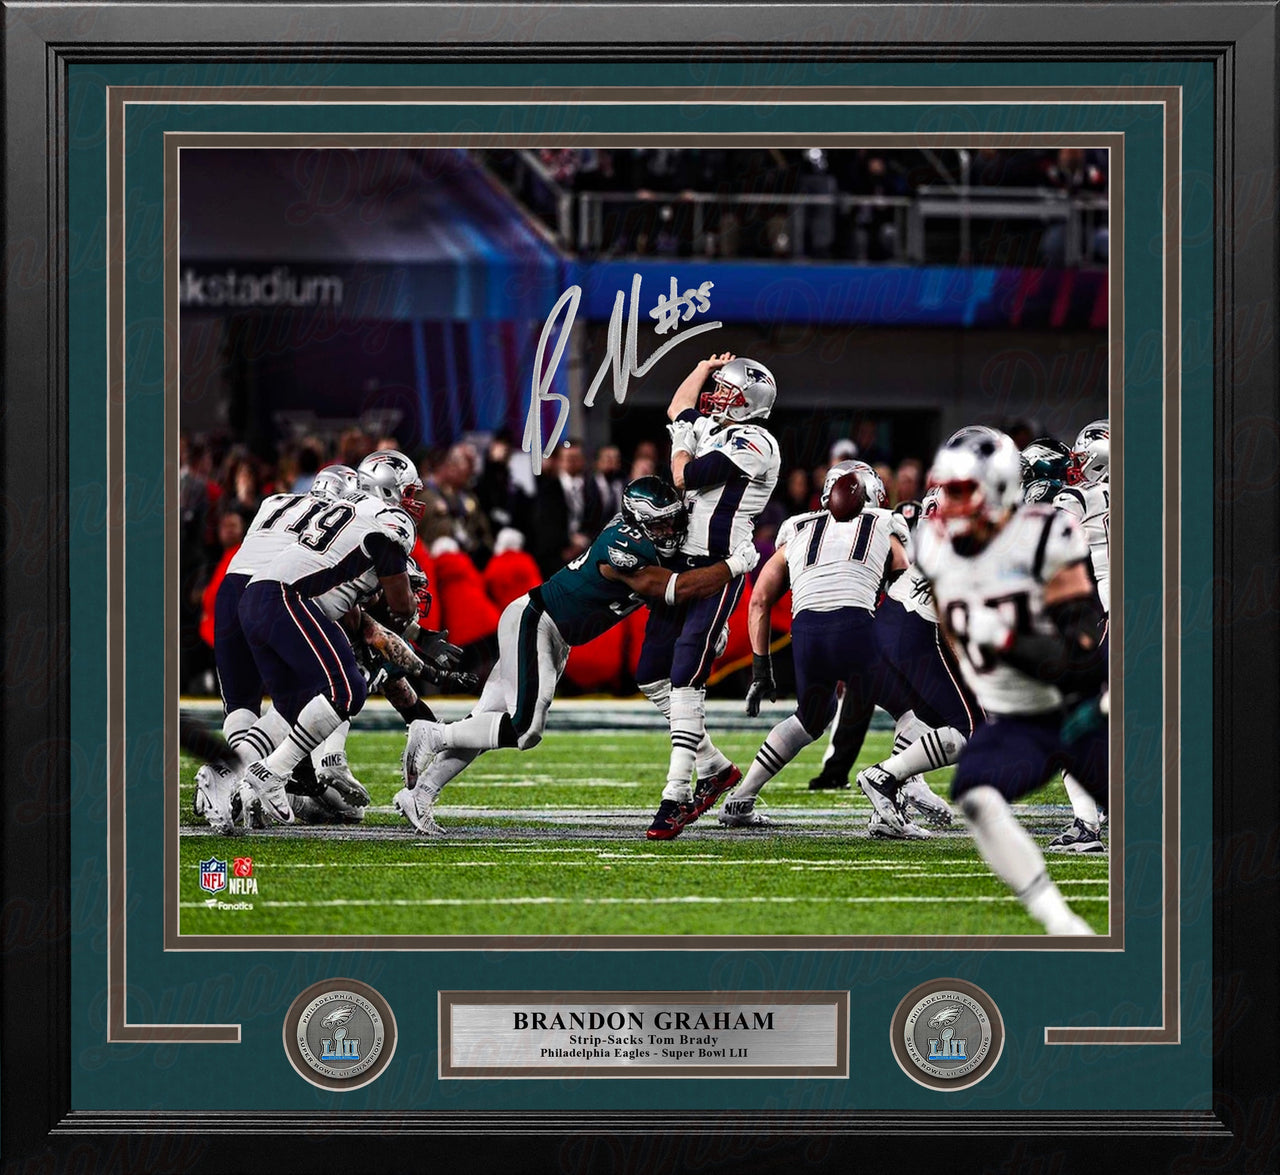 Brandon Graham Sacks Brady Philadelphia Eagles Autographed Super Bowl LII Framed Football Photo - Dynasty Sports & Framing 